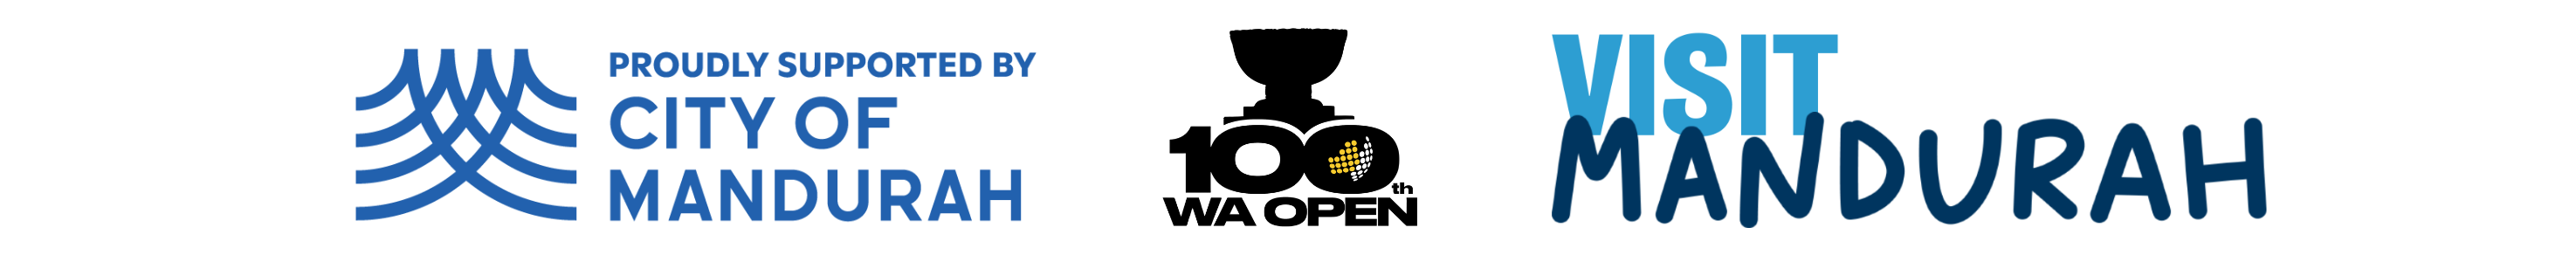 100th WA Open